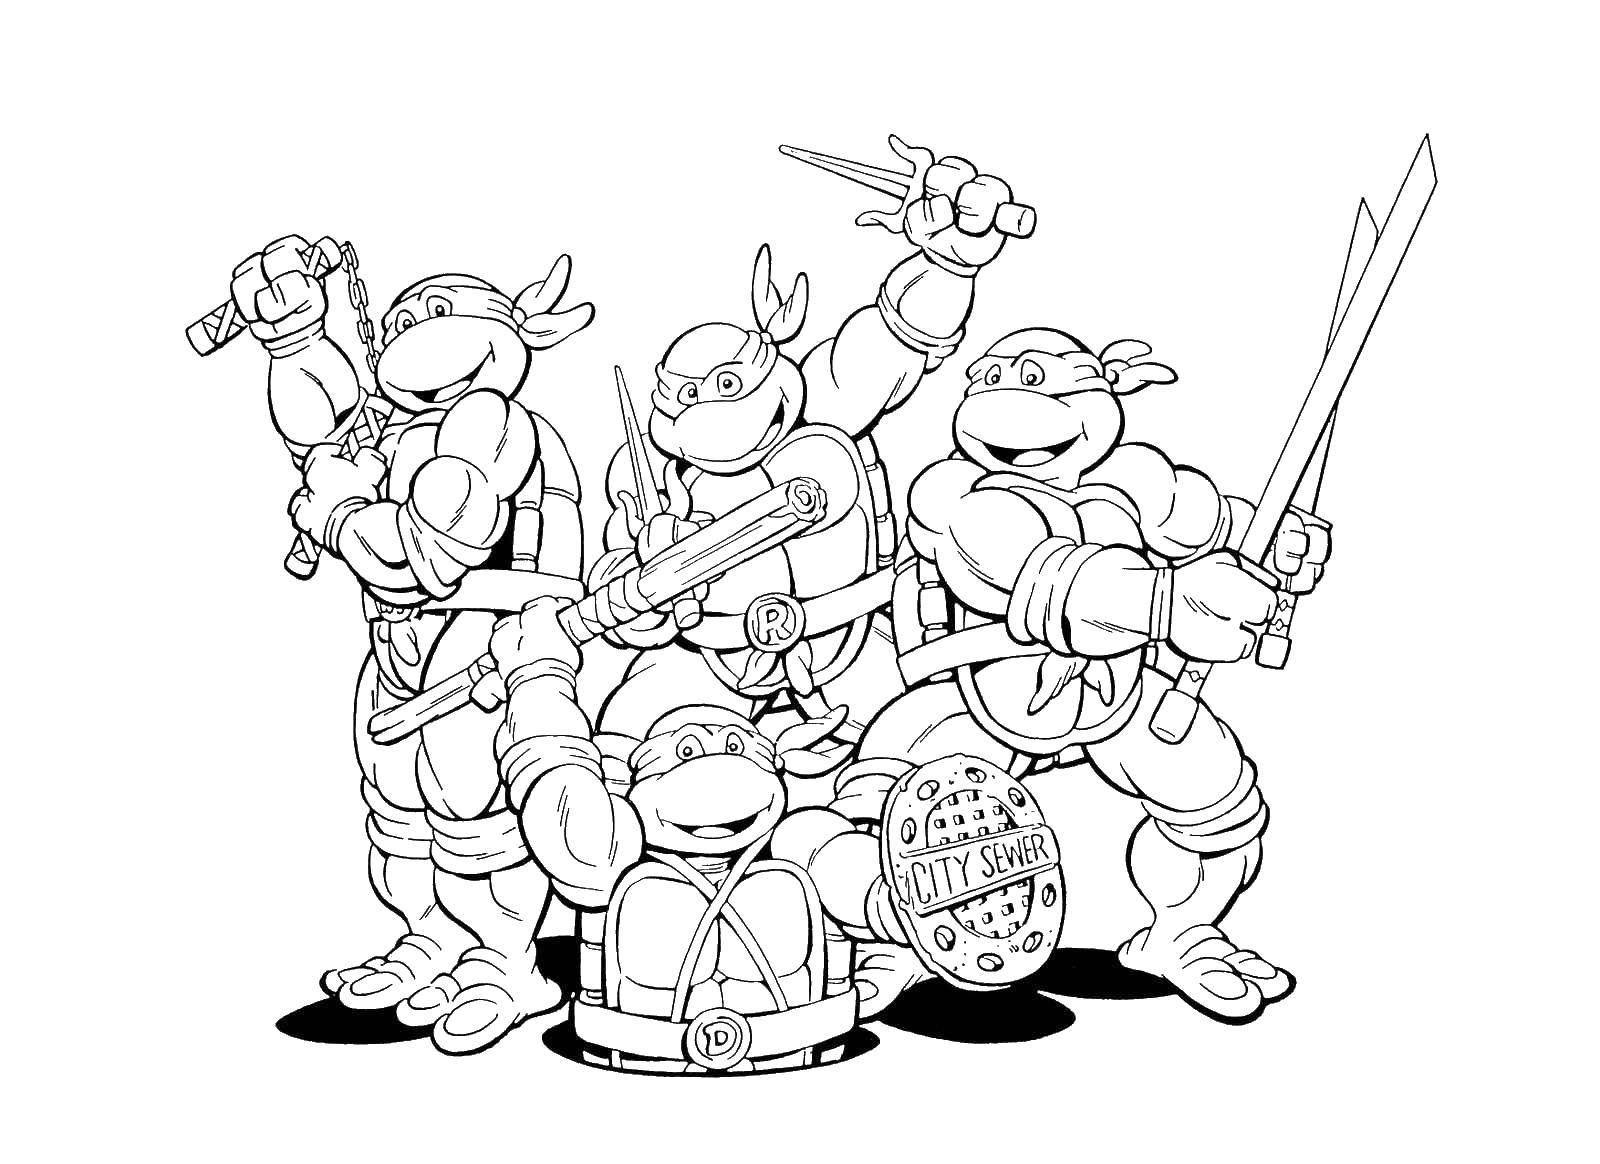 Coloring Turtles. Category teenage mutant ninja turtles. Tags:  ninja turtle, turtles, weapons, cartoons.